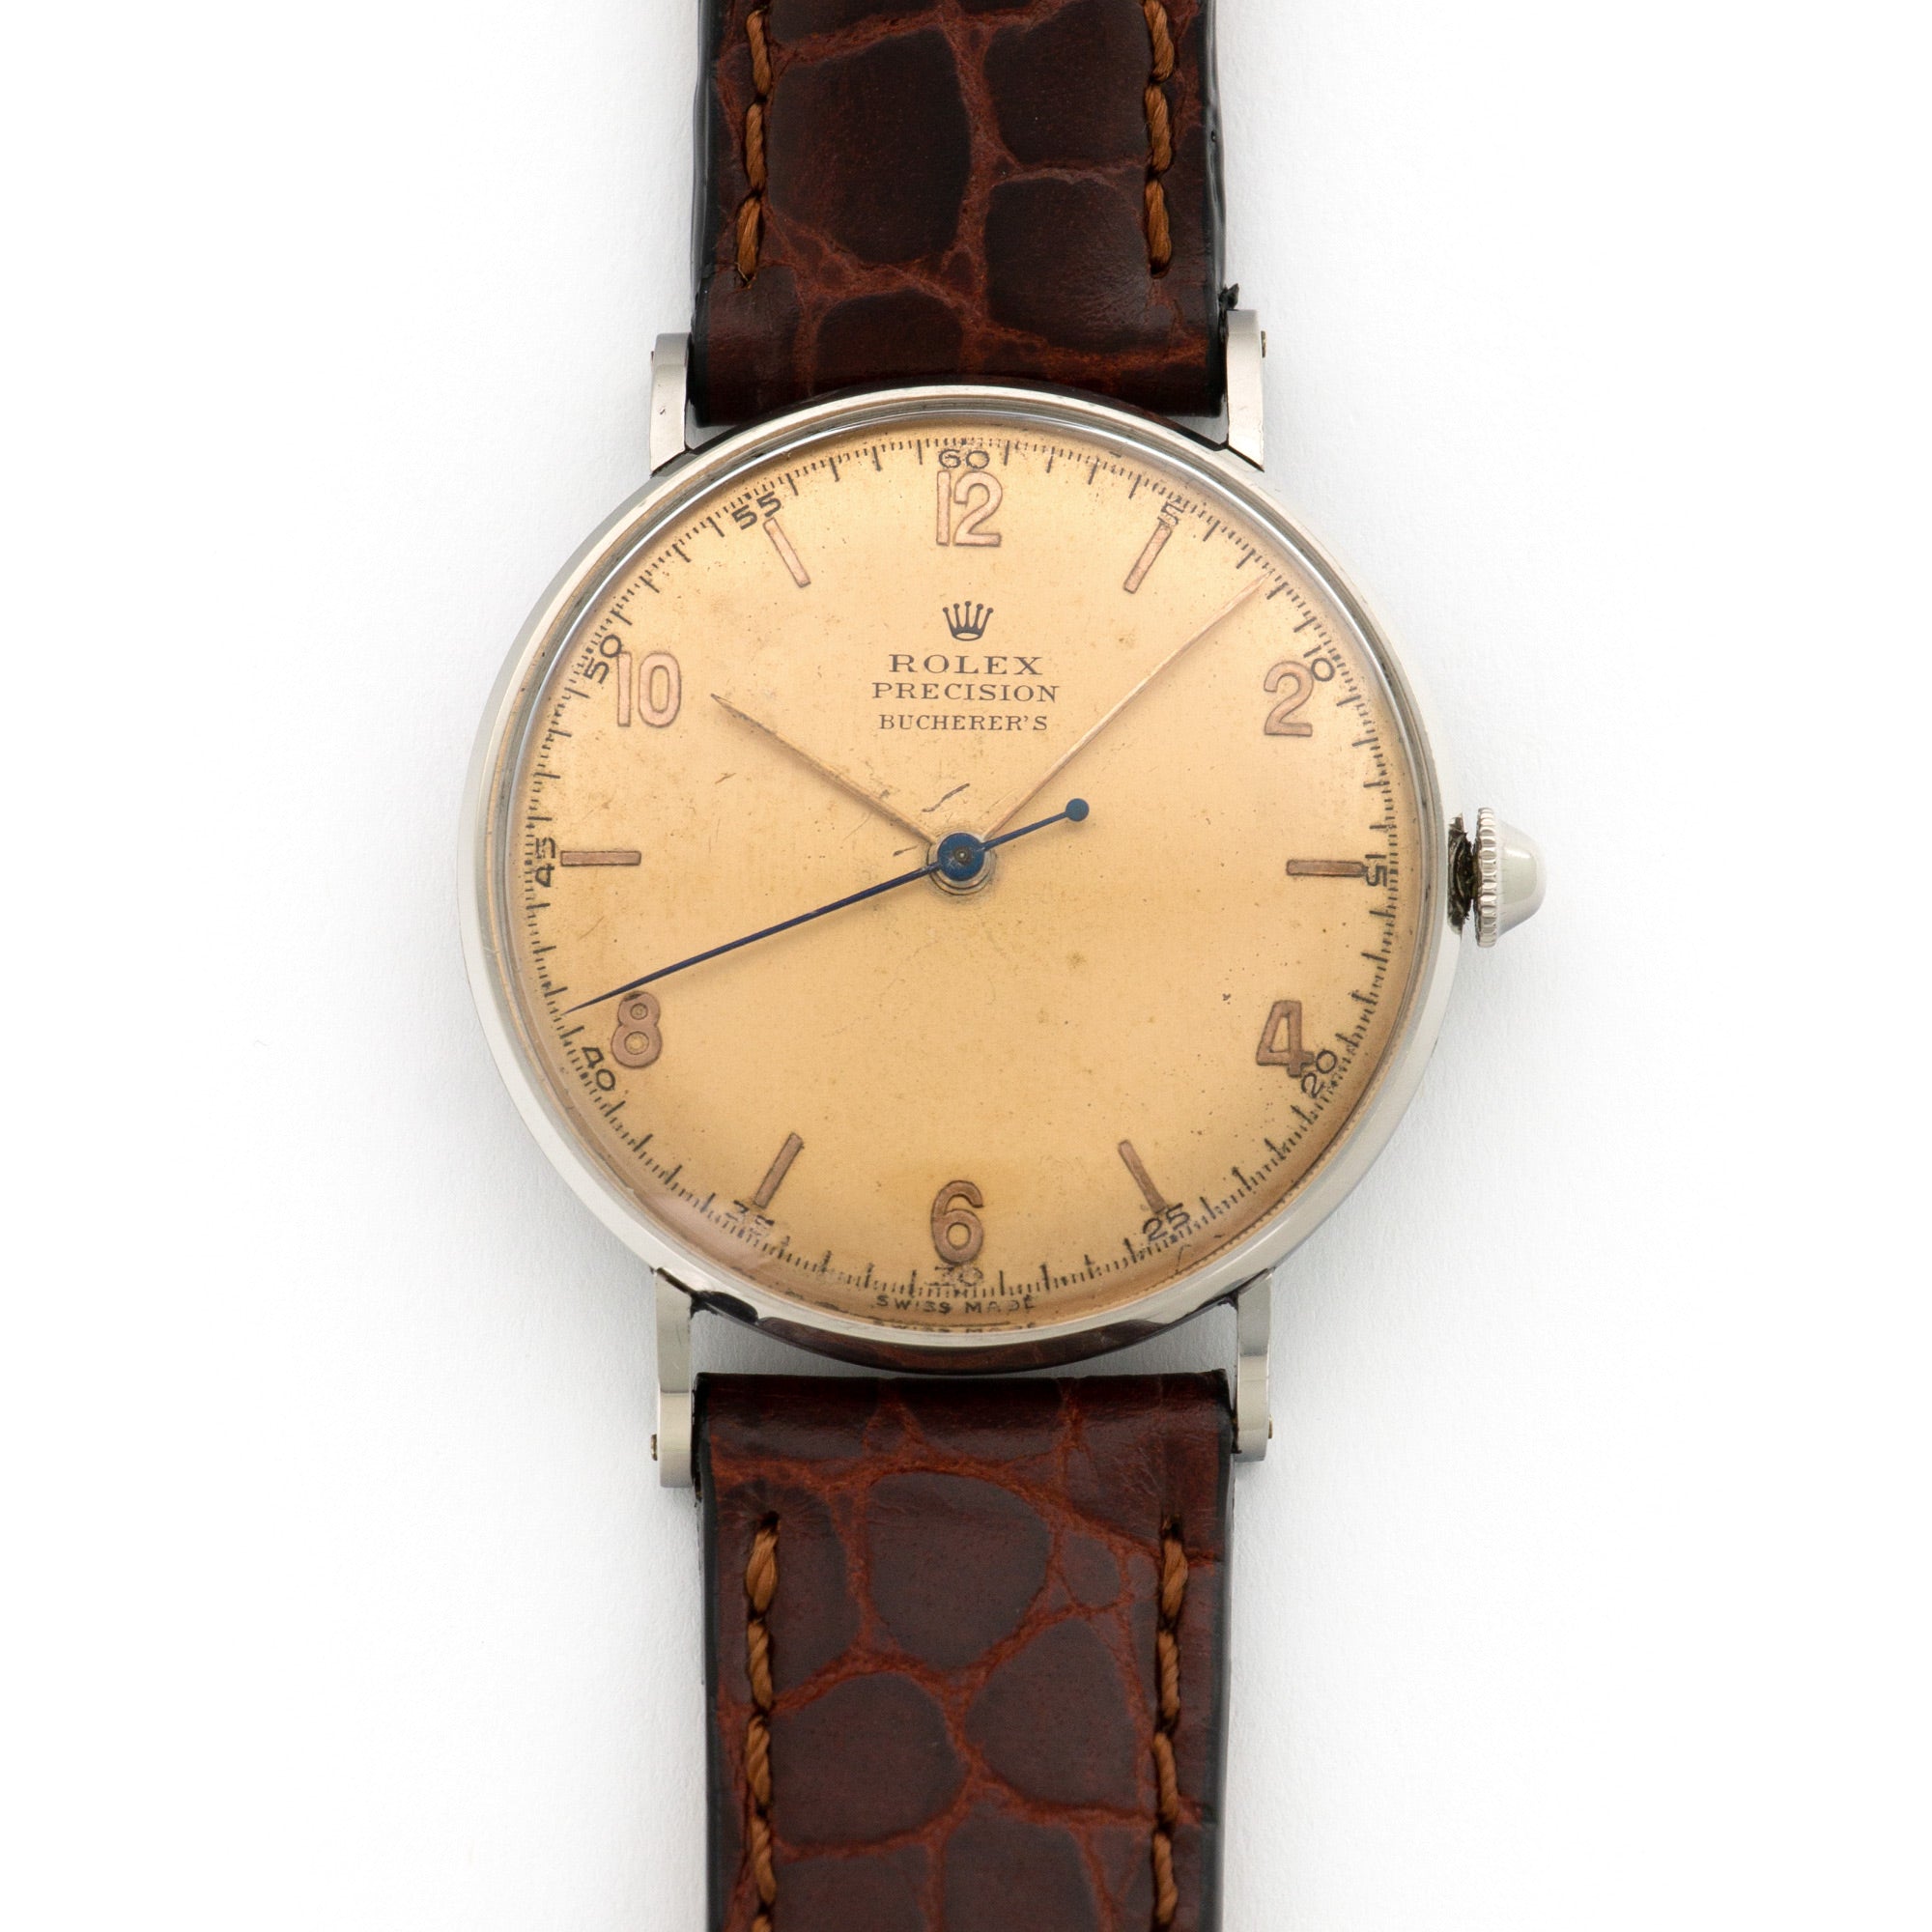 Rolex - Rolex Steel Precision Watch Ref. 4061, Retailed by Bucherers - The Keystone Watches